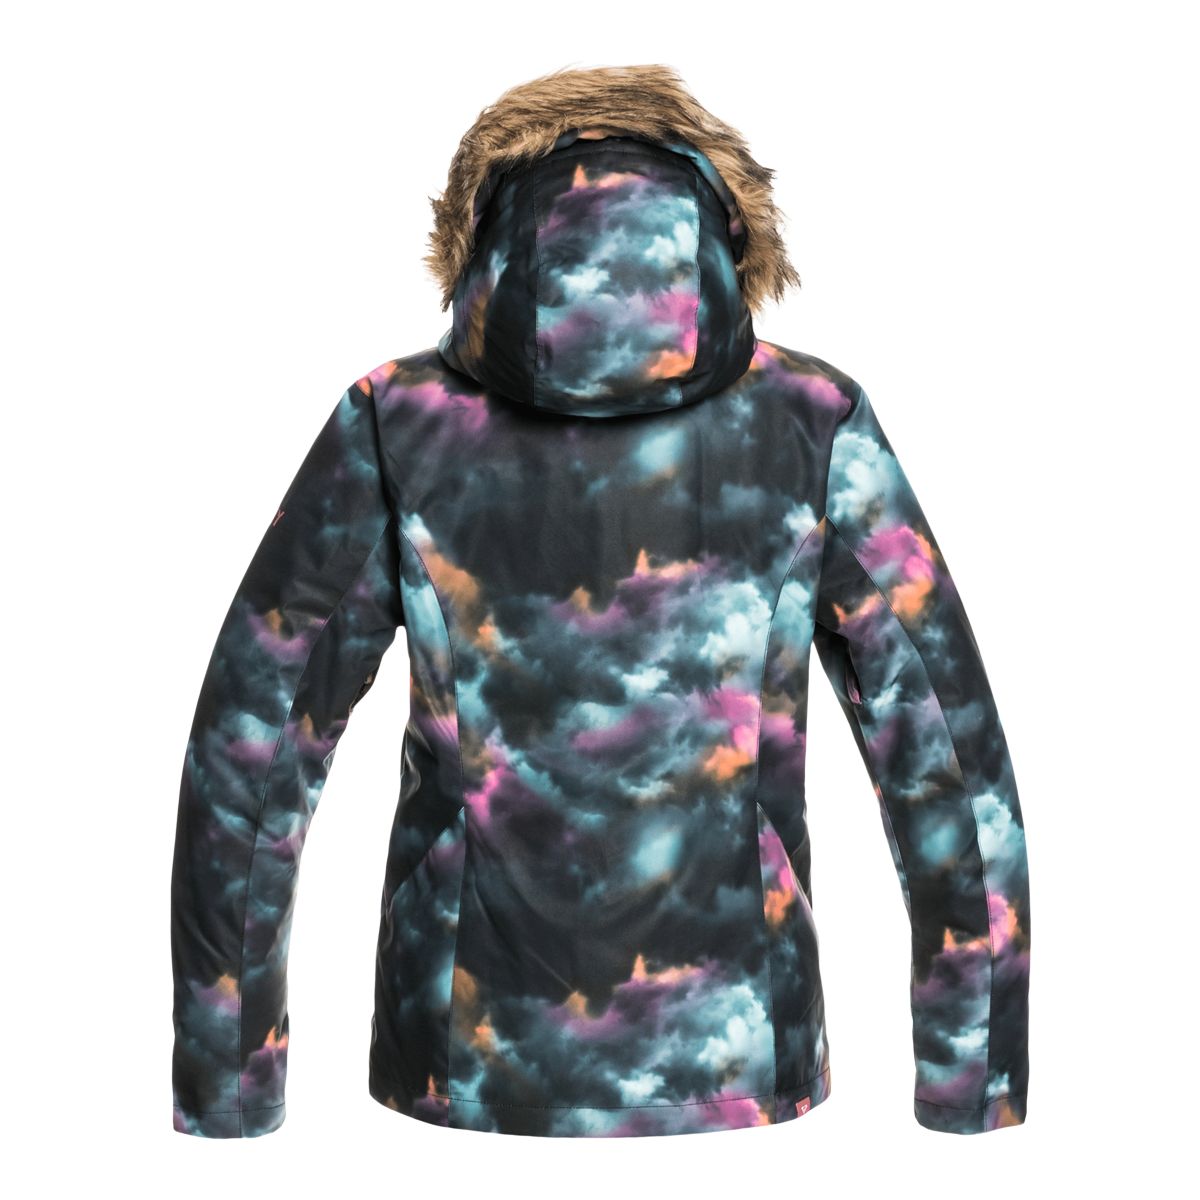 Roxy Women's Jet Ski Winter Ski Jacket, Insulated, Hooded